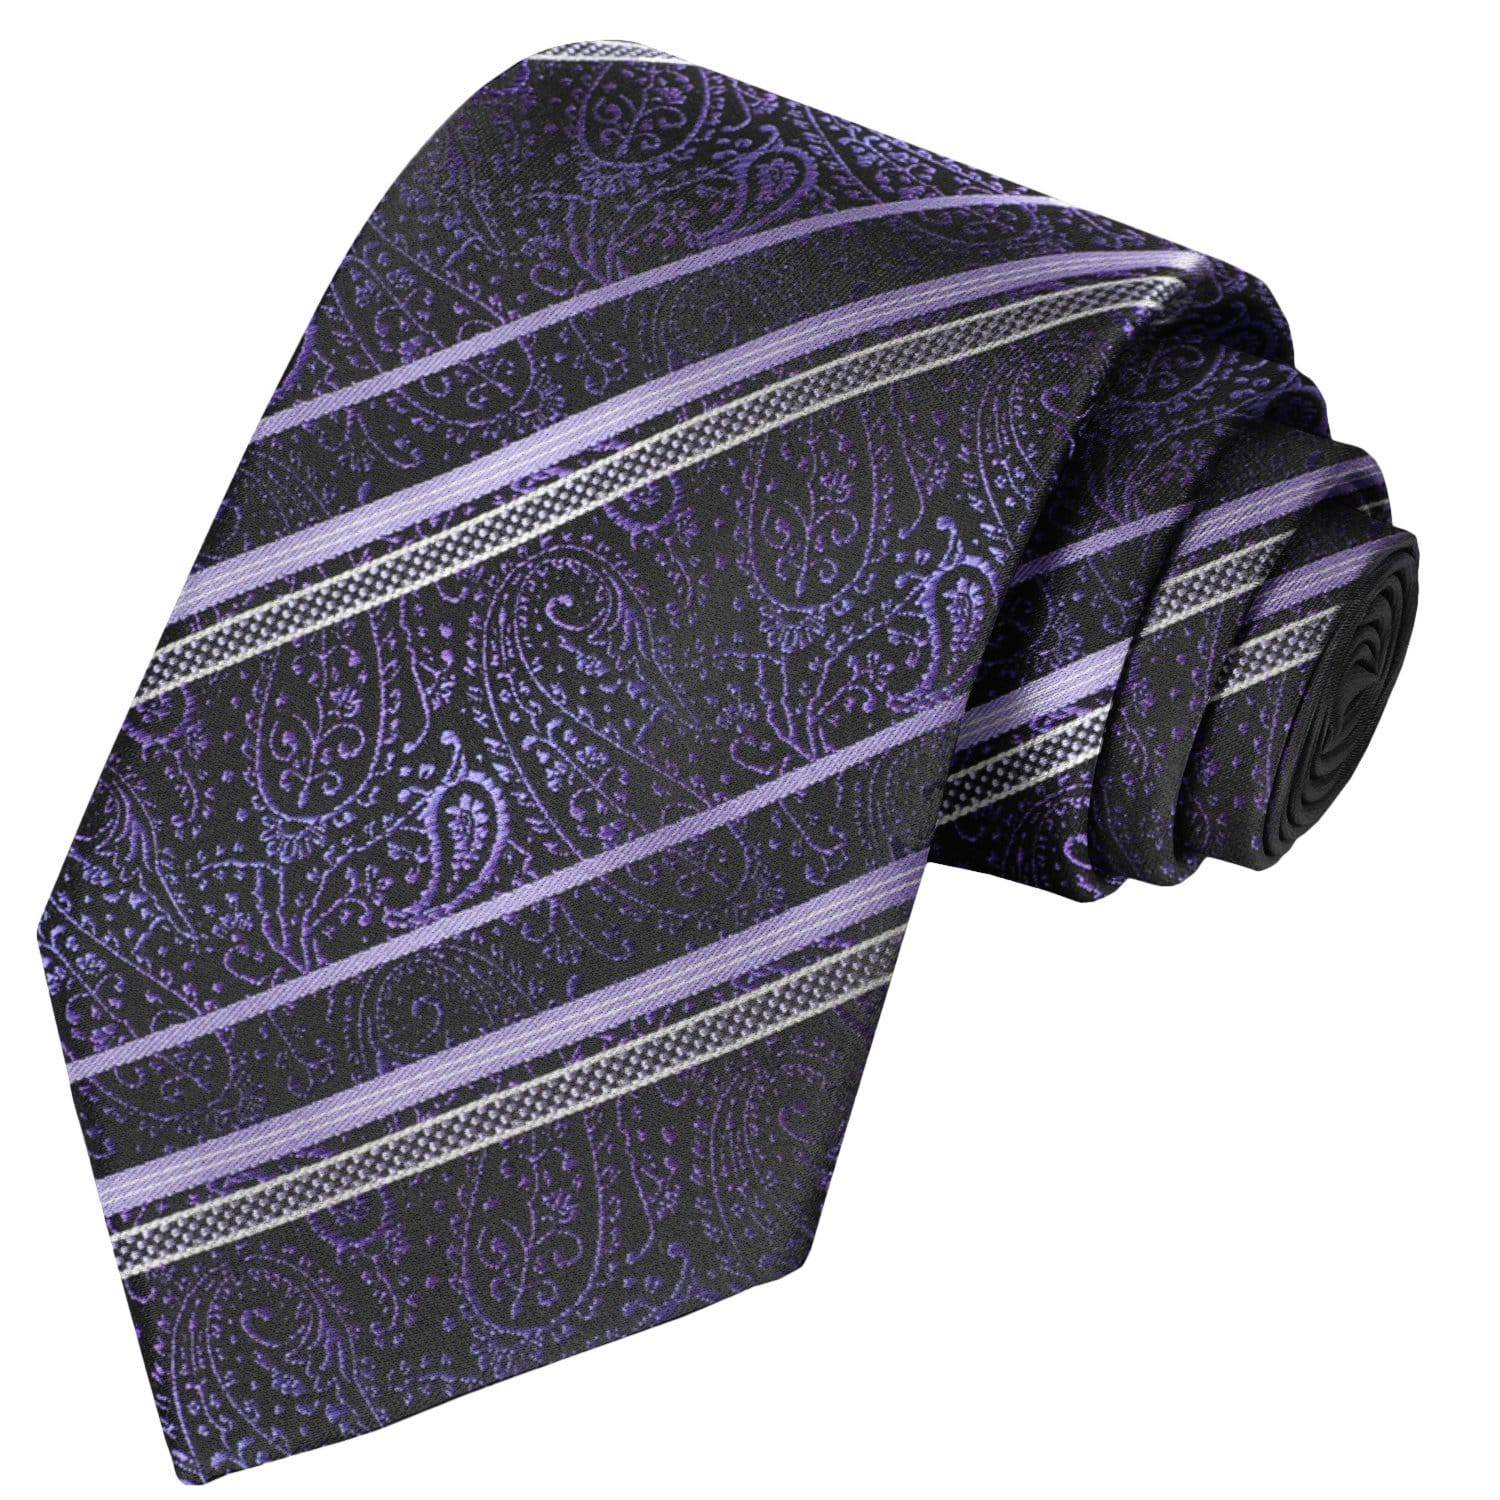 White Periwinkle Stripes  on Black-Amethyst Paisley Tie - Tie, bowtie, pocket square  | Kissties